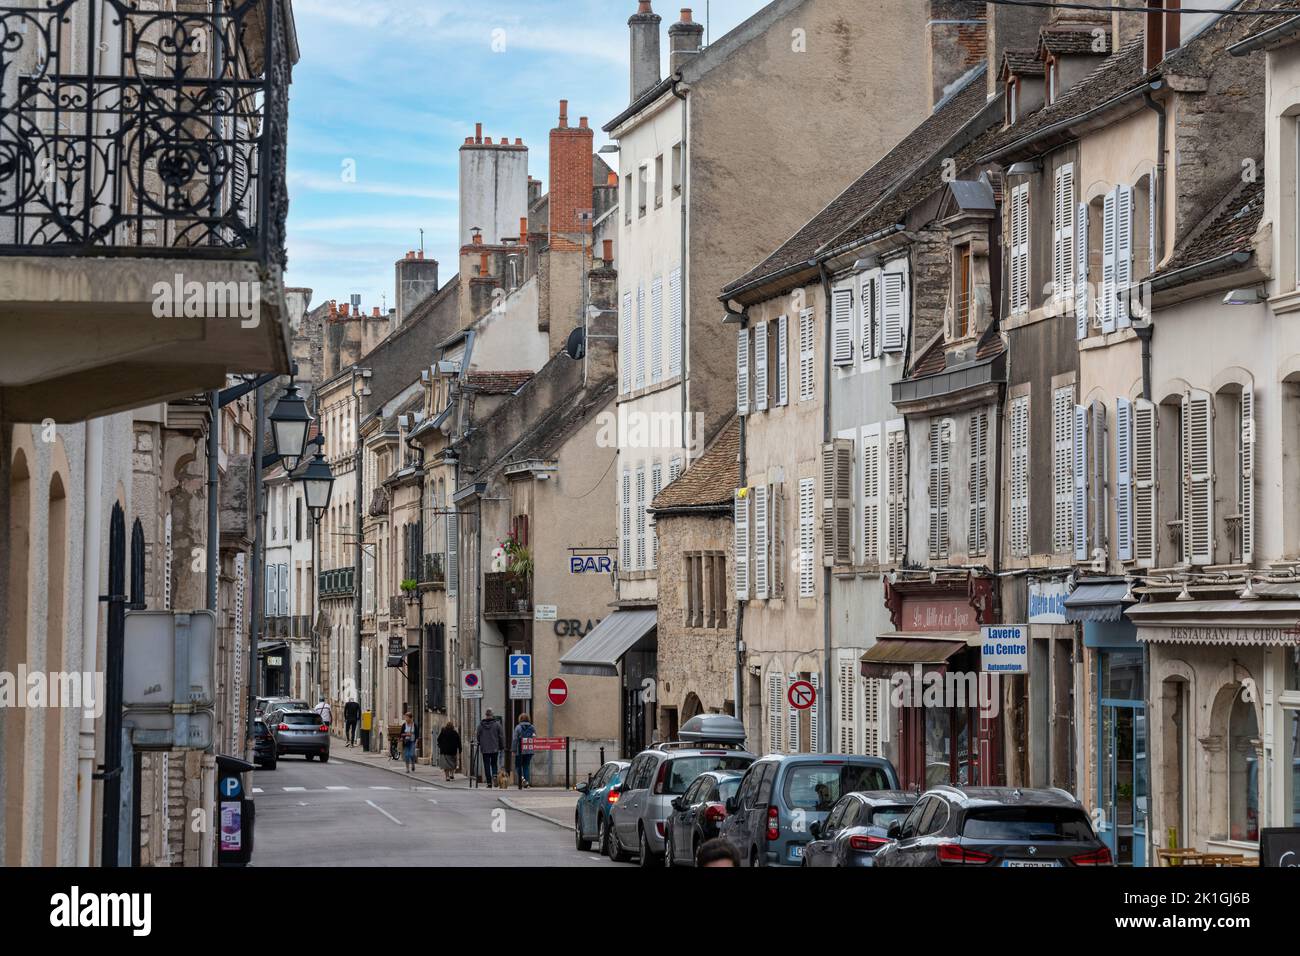 Rue De Lorraine in Beaune, Burgundy France. Stock Photo